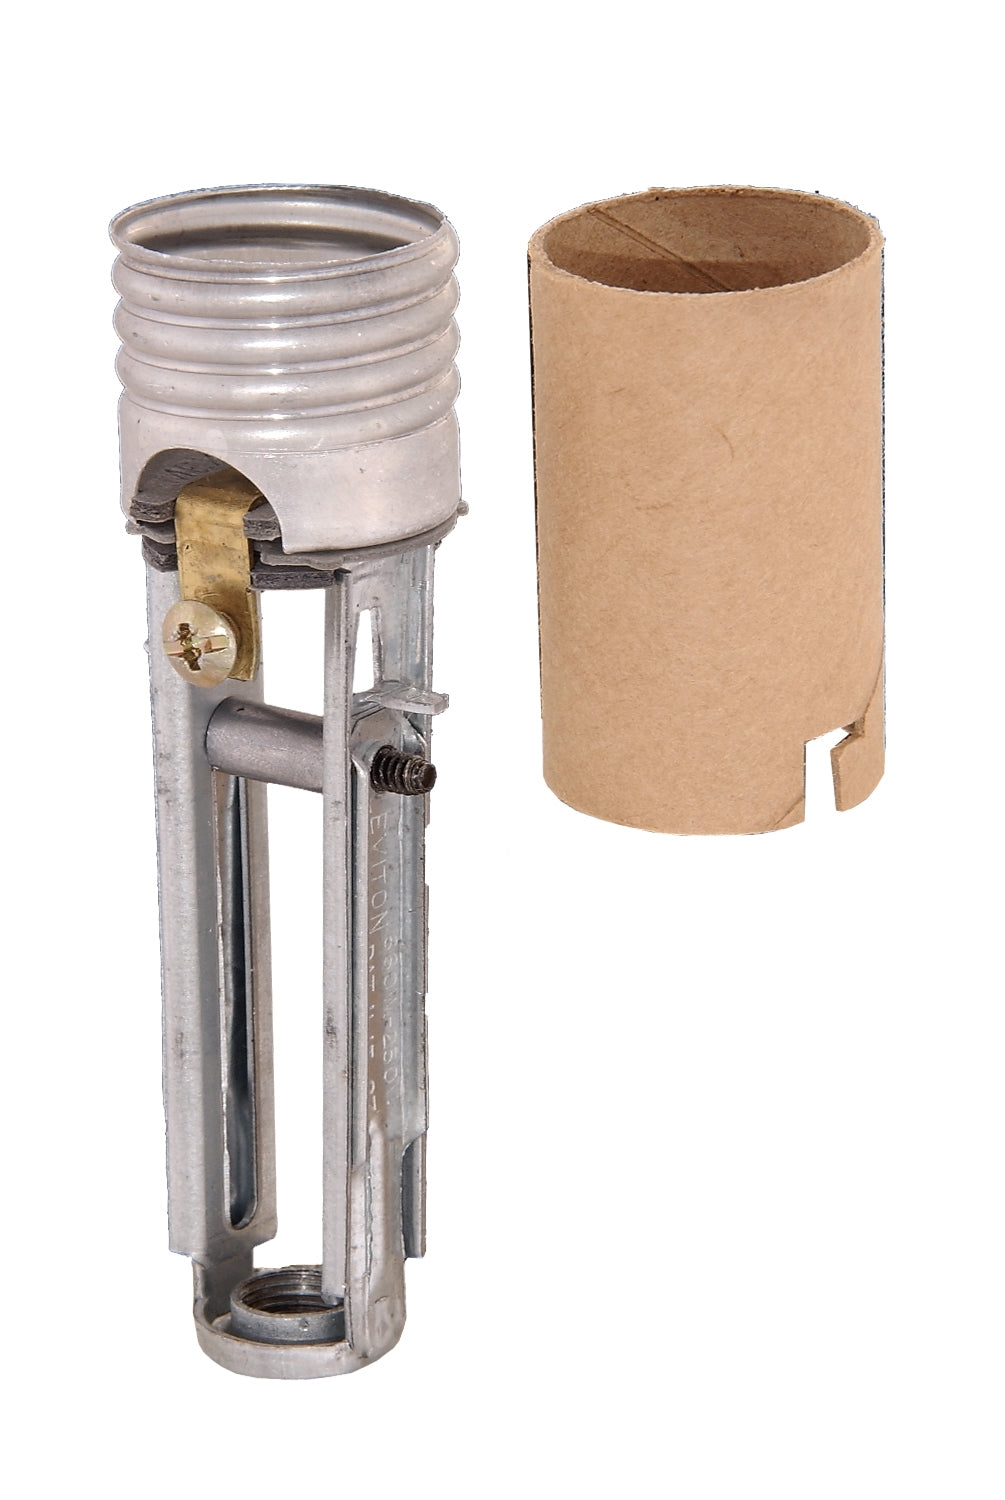 Medium Base, Adjustable Keyless Candle Socket, adjusts from 4" to 5-3/4" tall